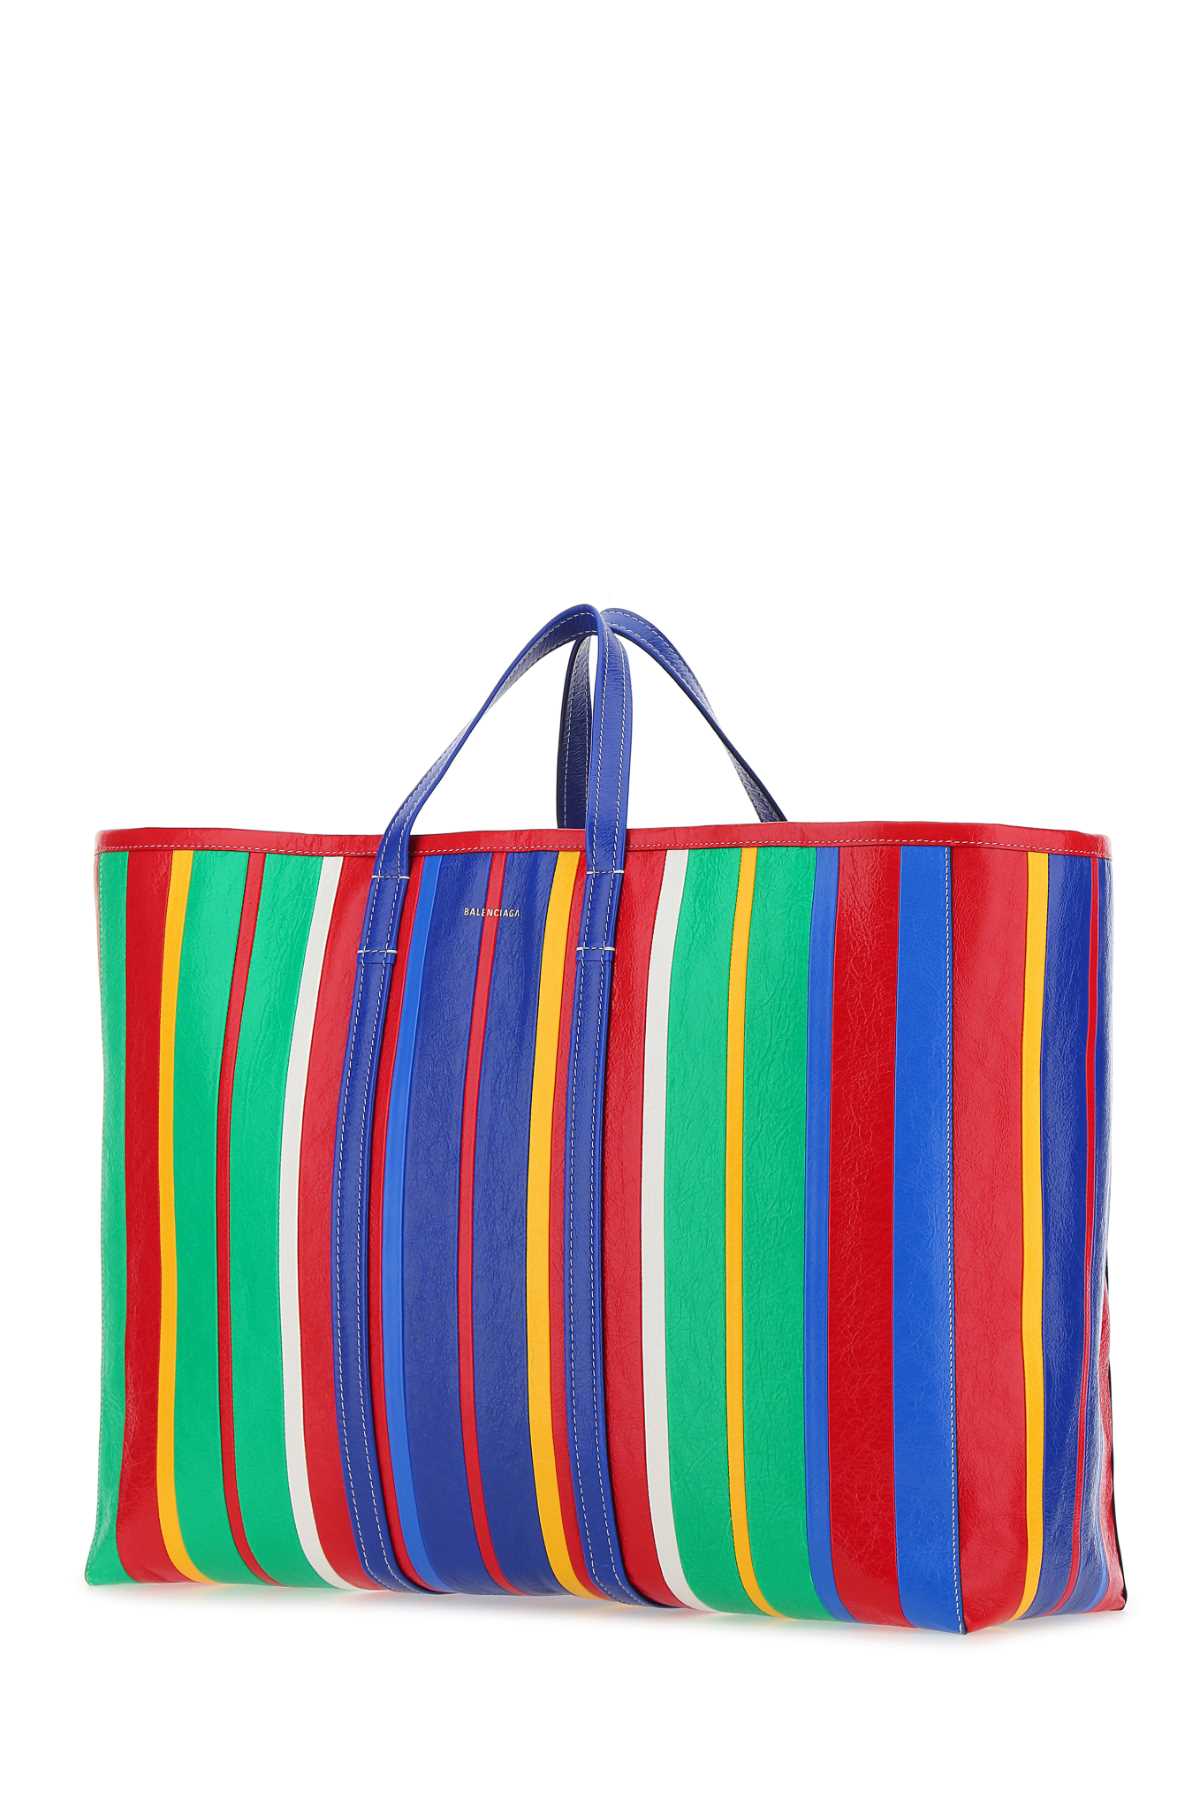 Balenciaga Multicolor Leather Large Barber Shopping Bag In 4361